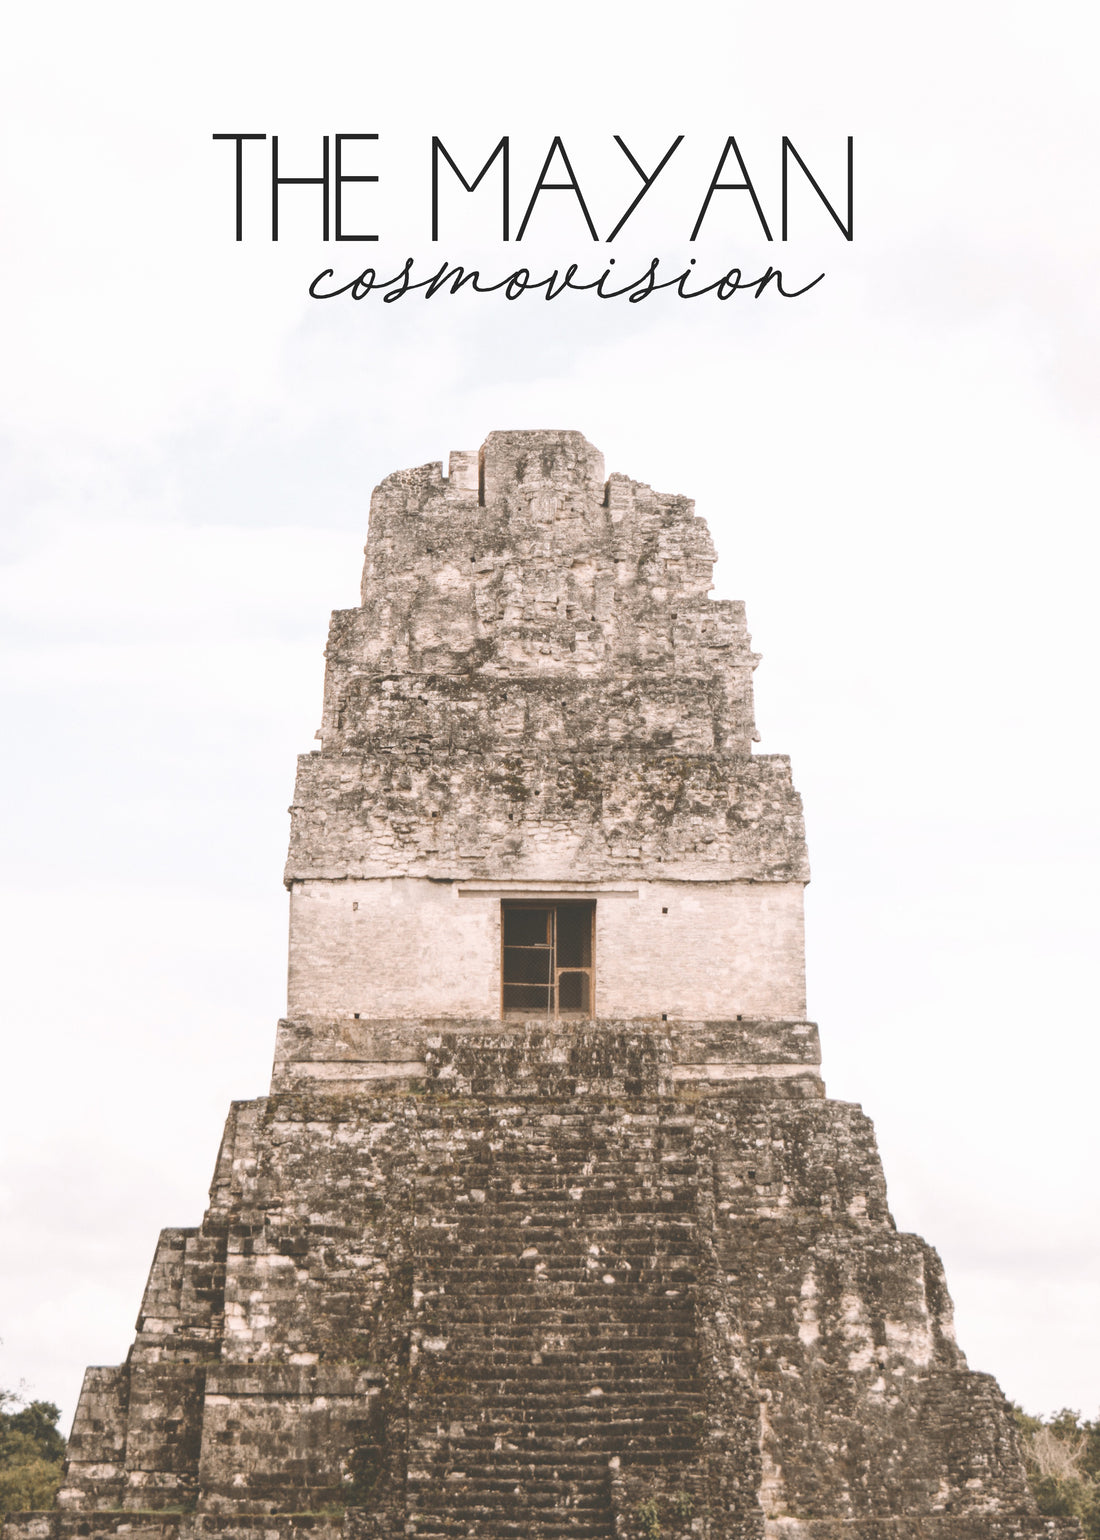 The Mayan Cosmovision